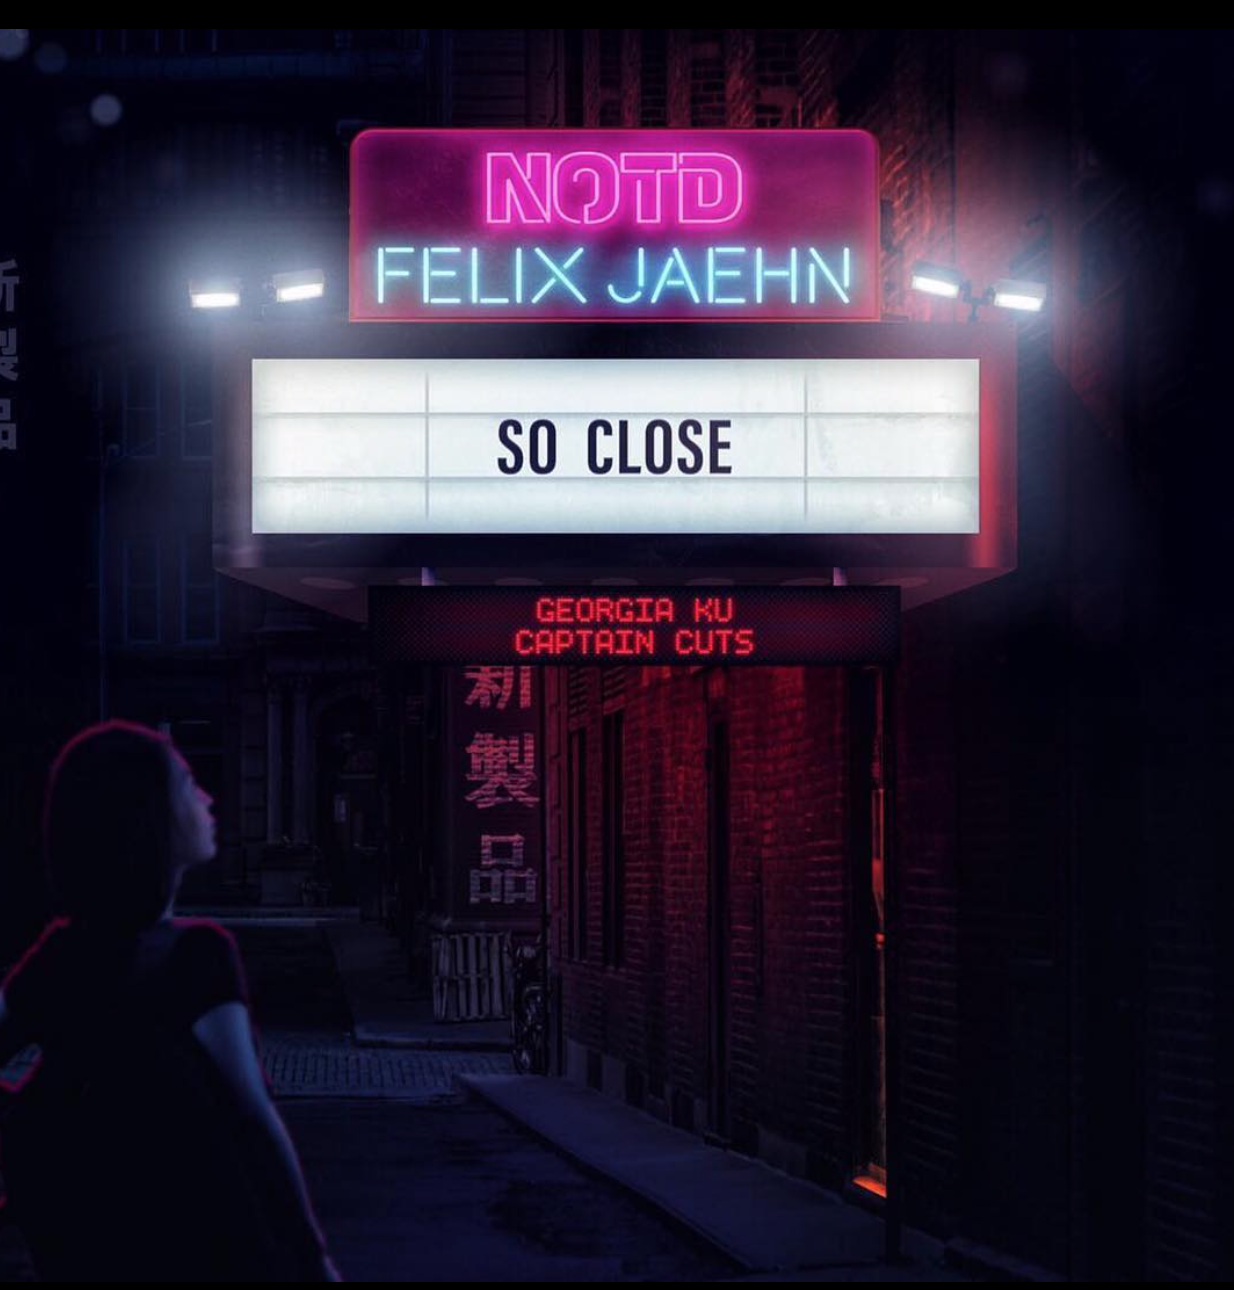 NOTD–"So Close"